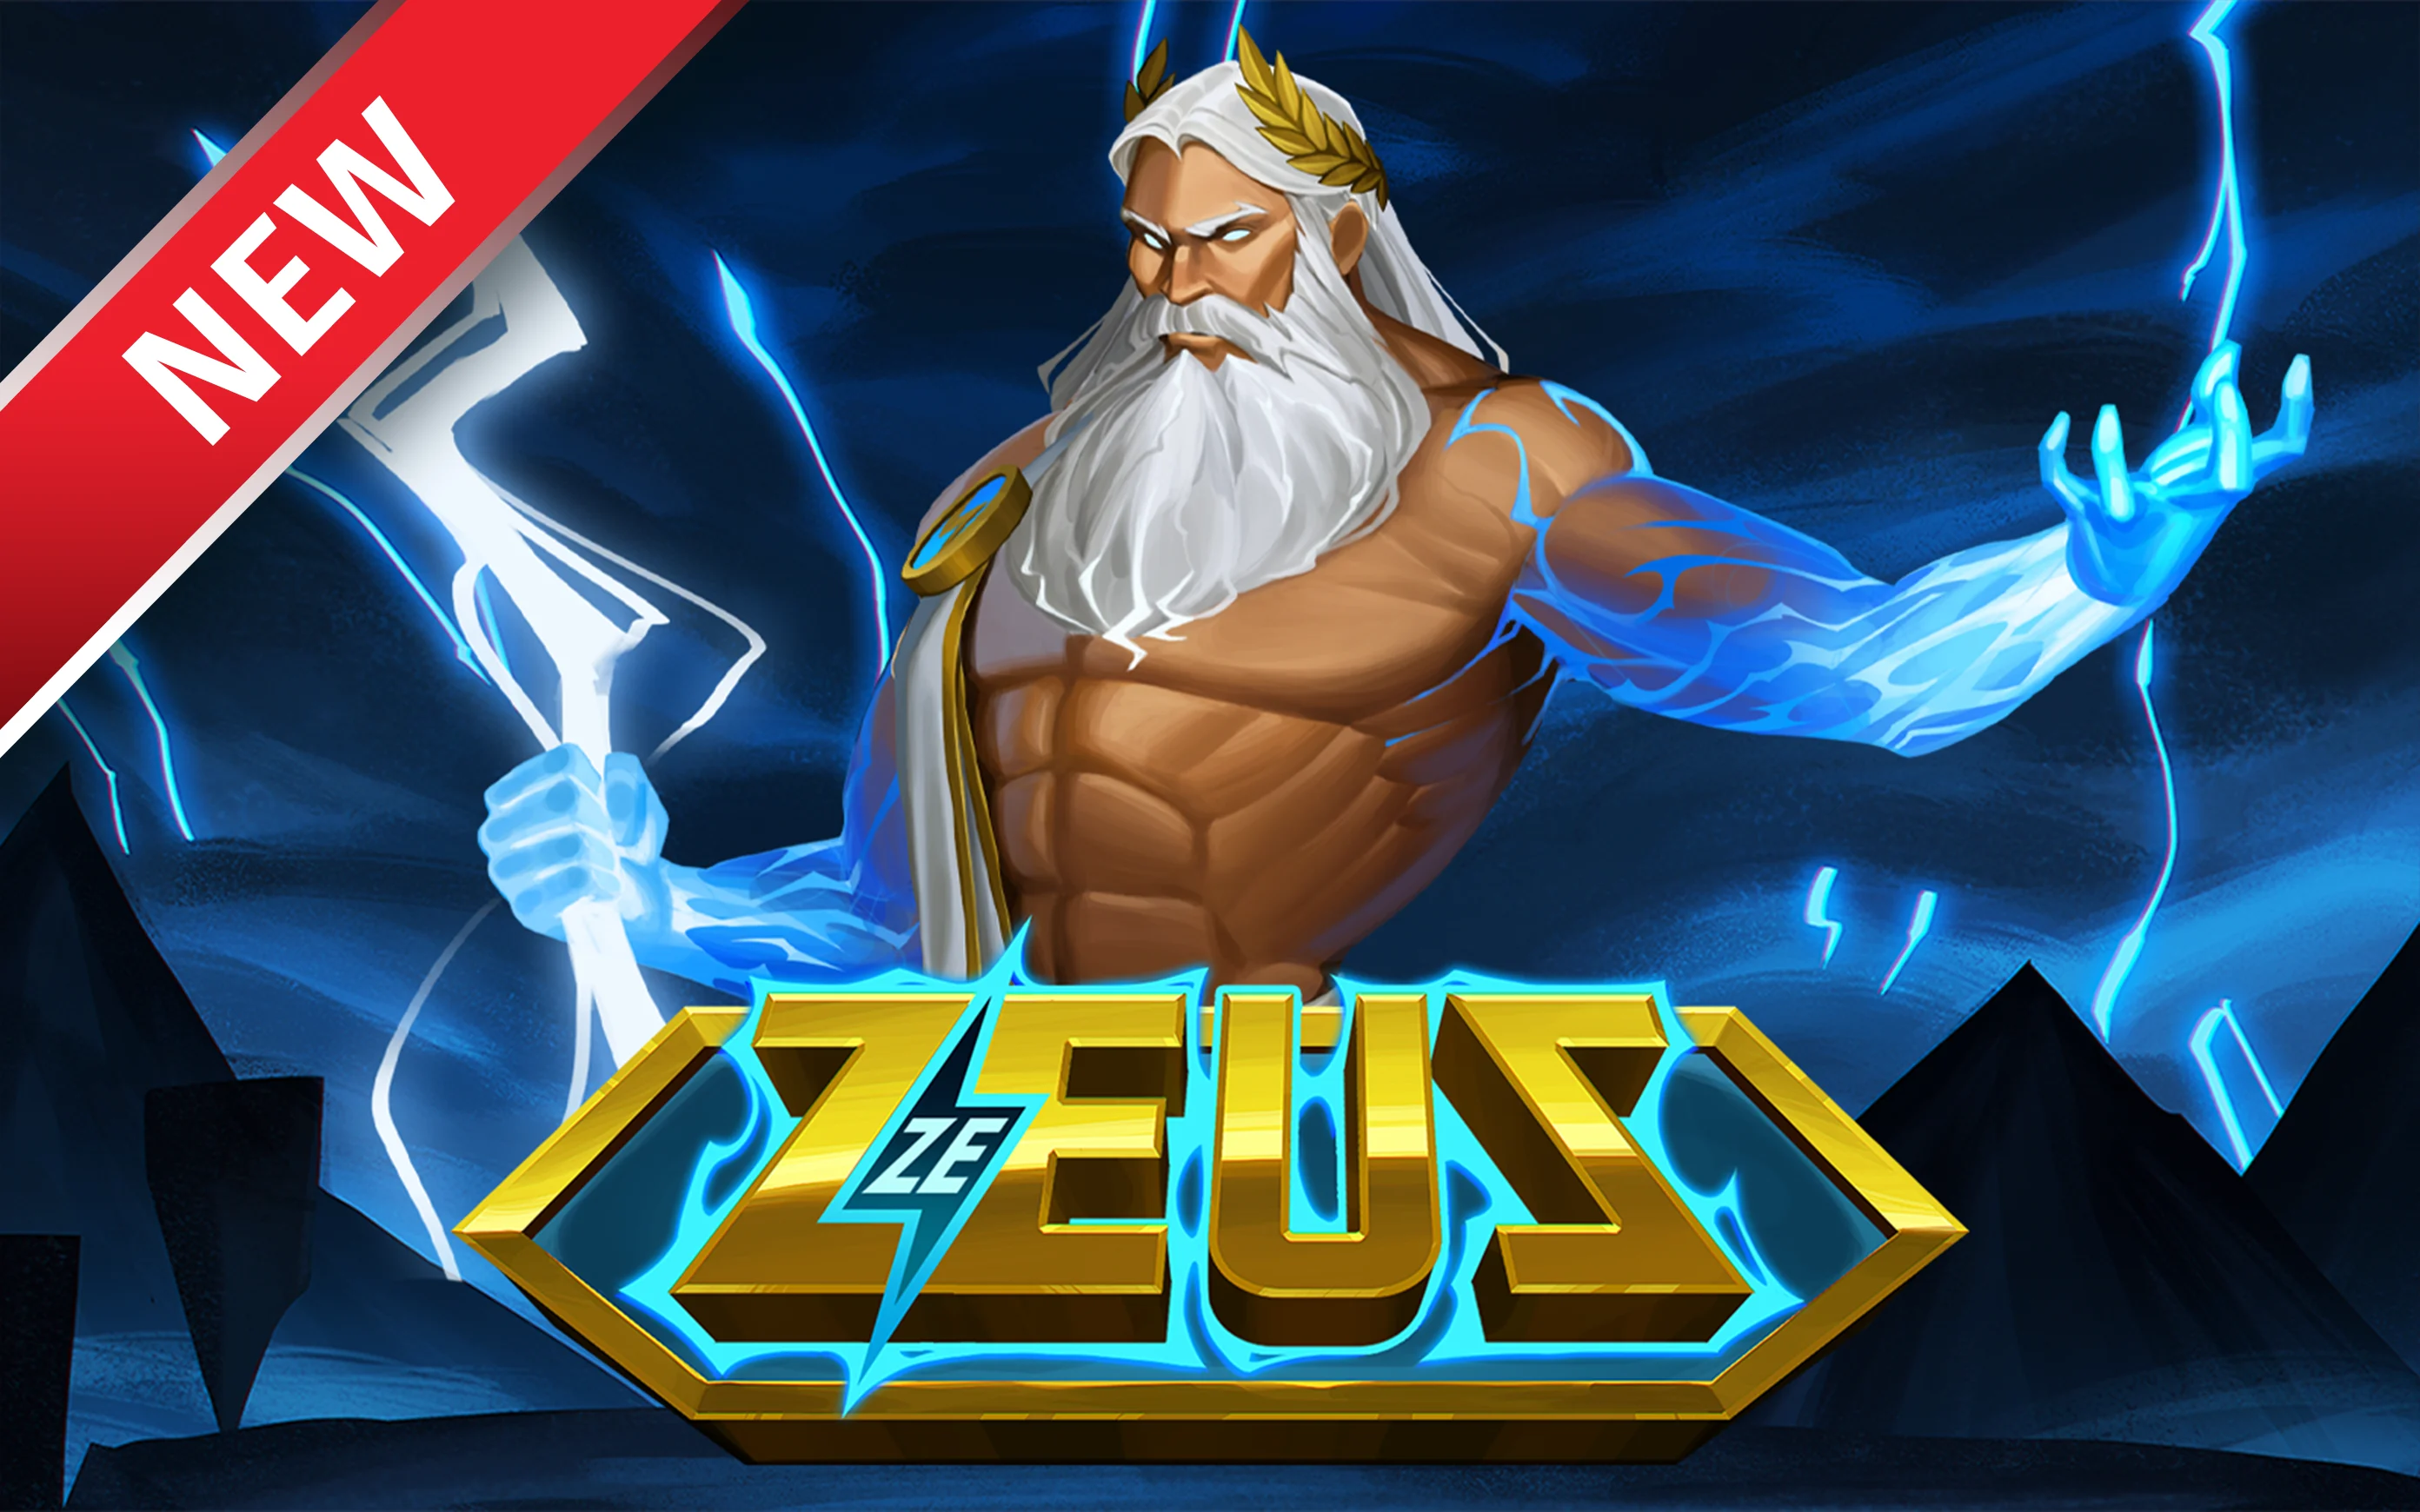 Gioca a Ze Zeus sul casino online Starcasino.be